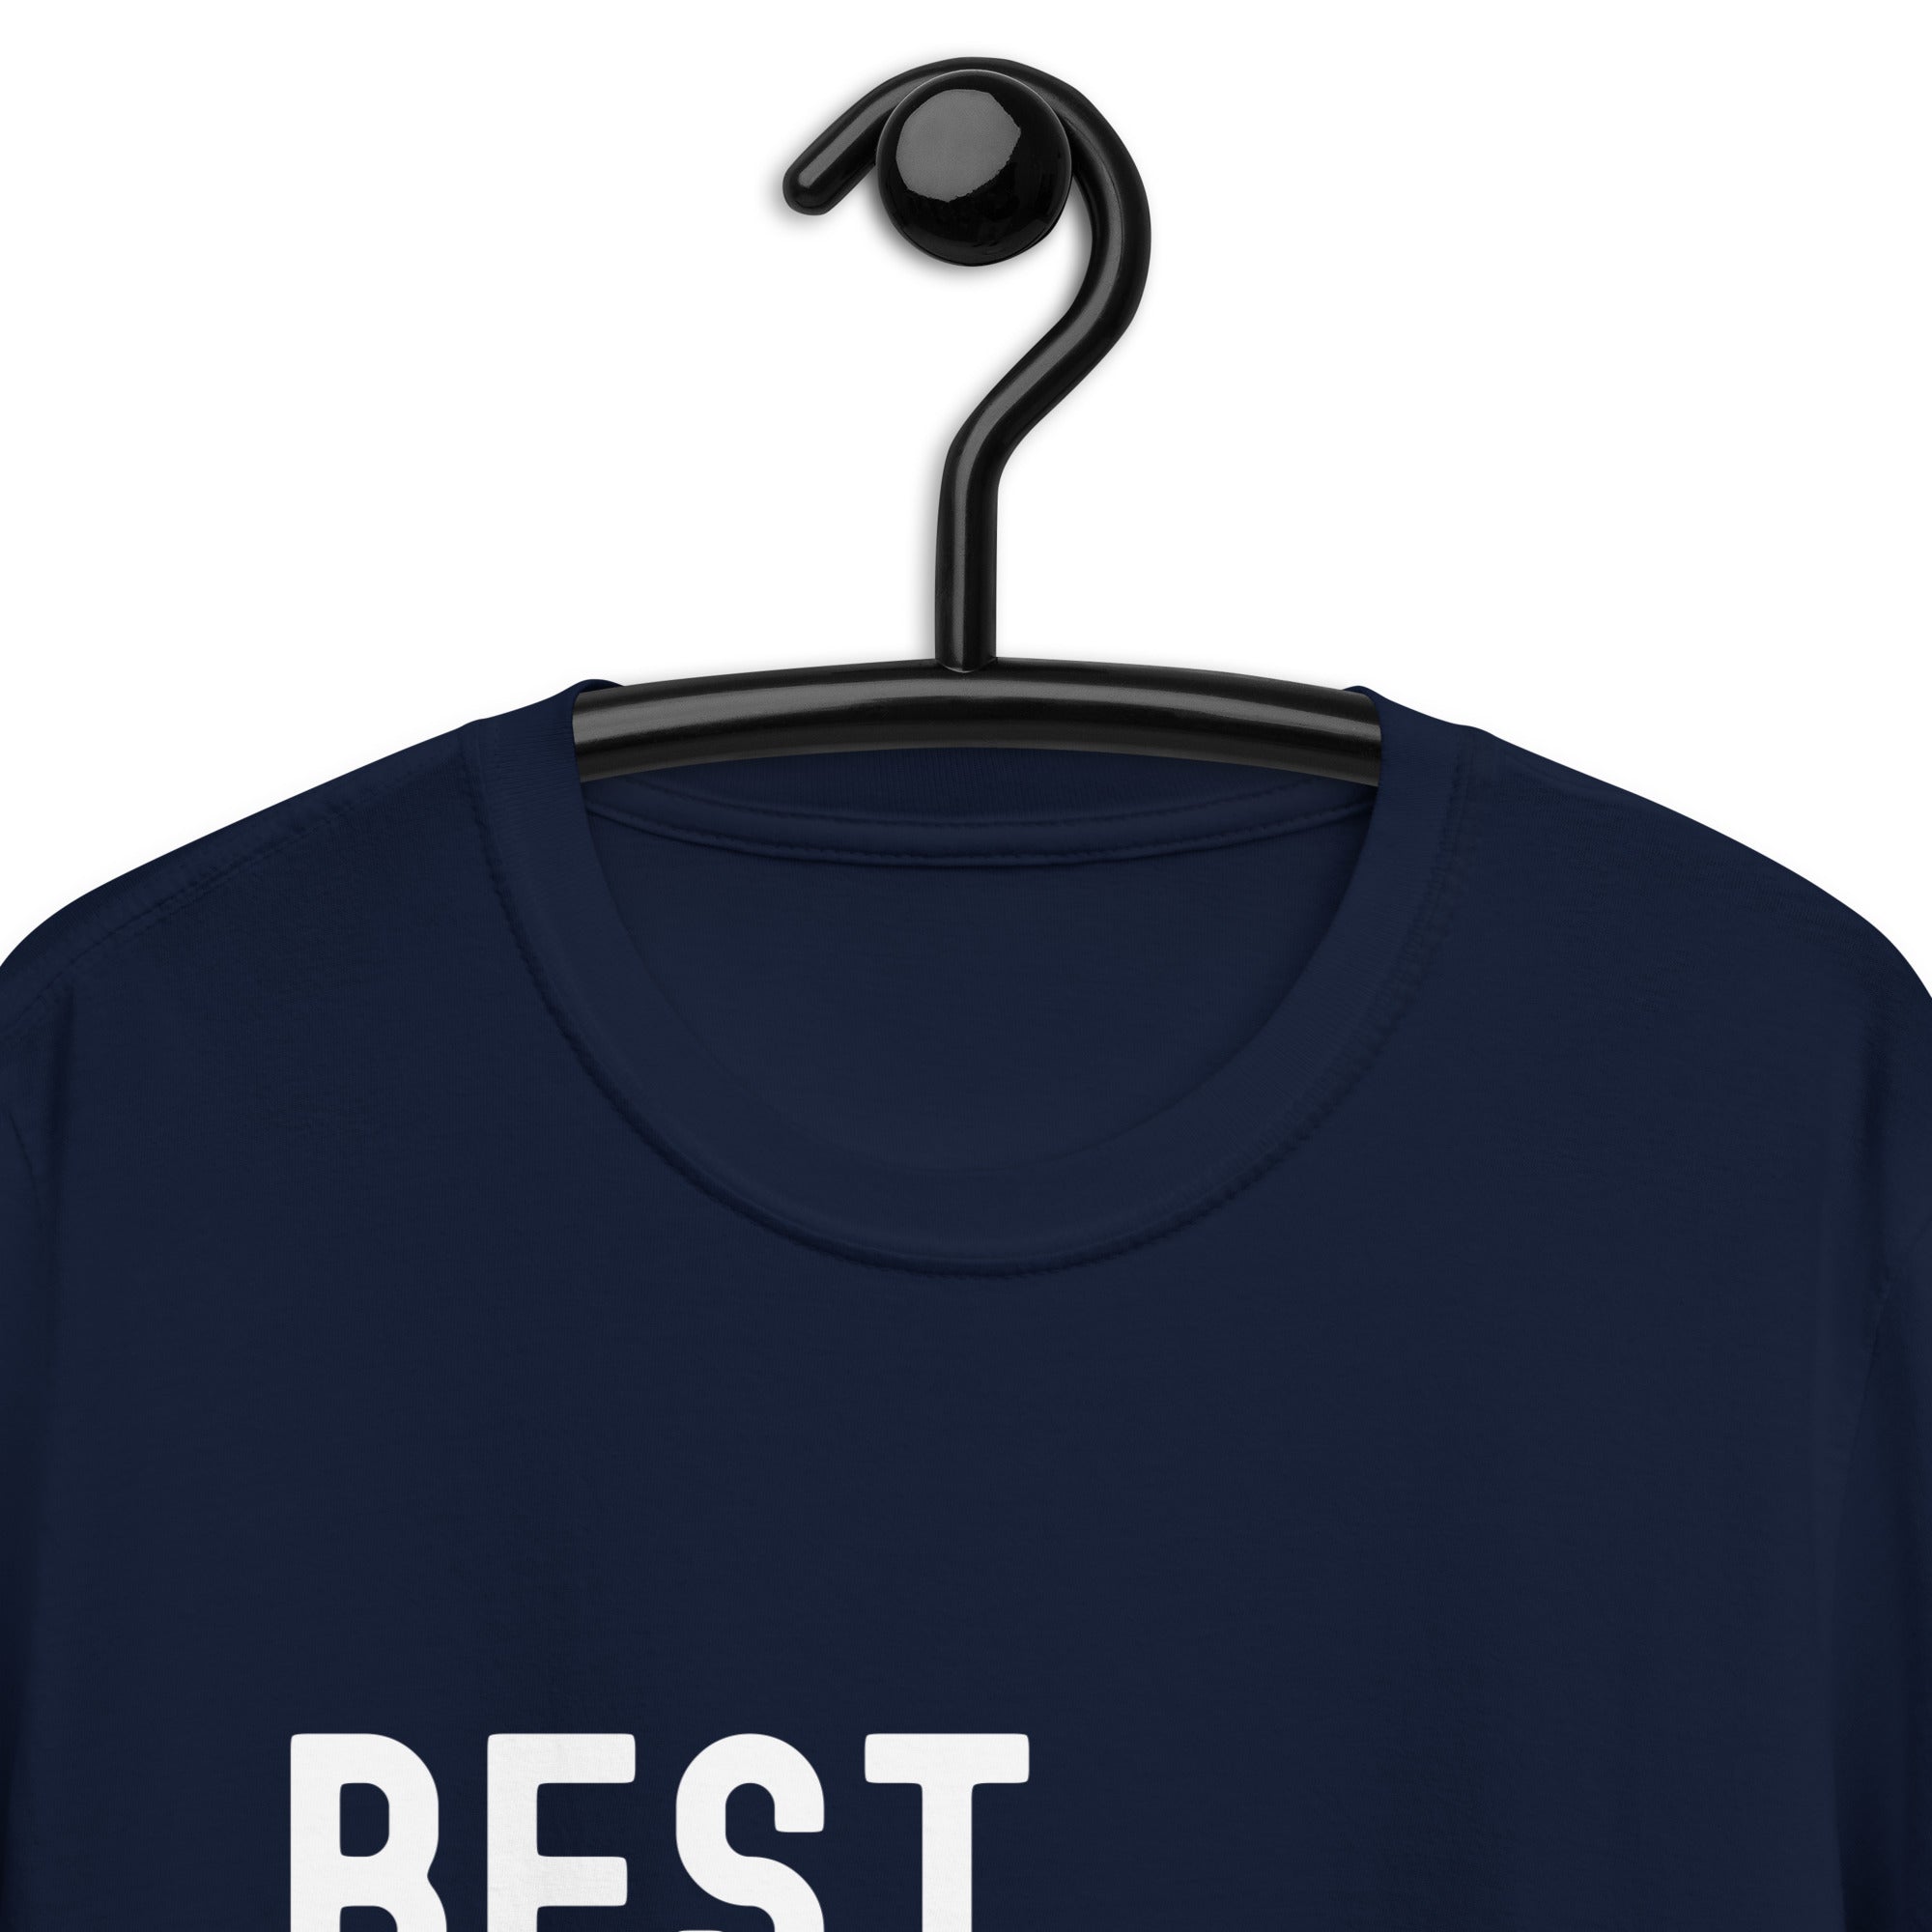 Short-Sleeve Unisex T-Shirt | Best. Trader. Ever.